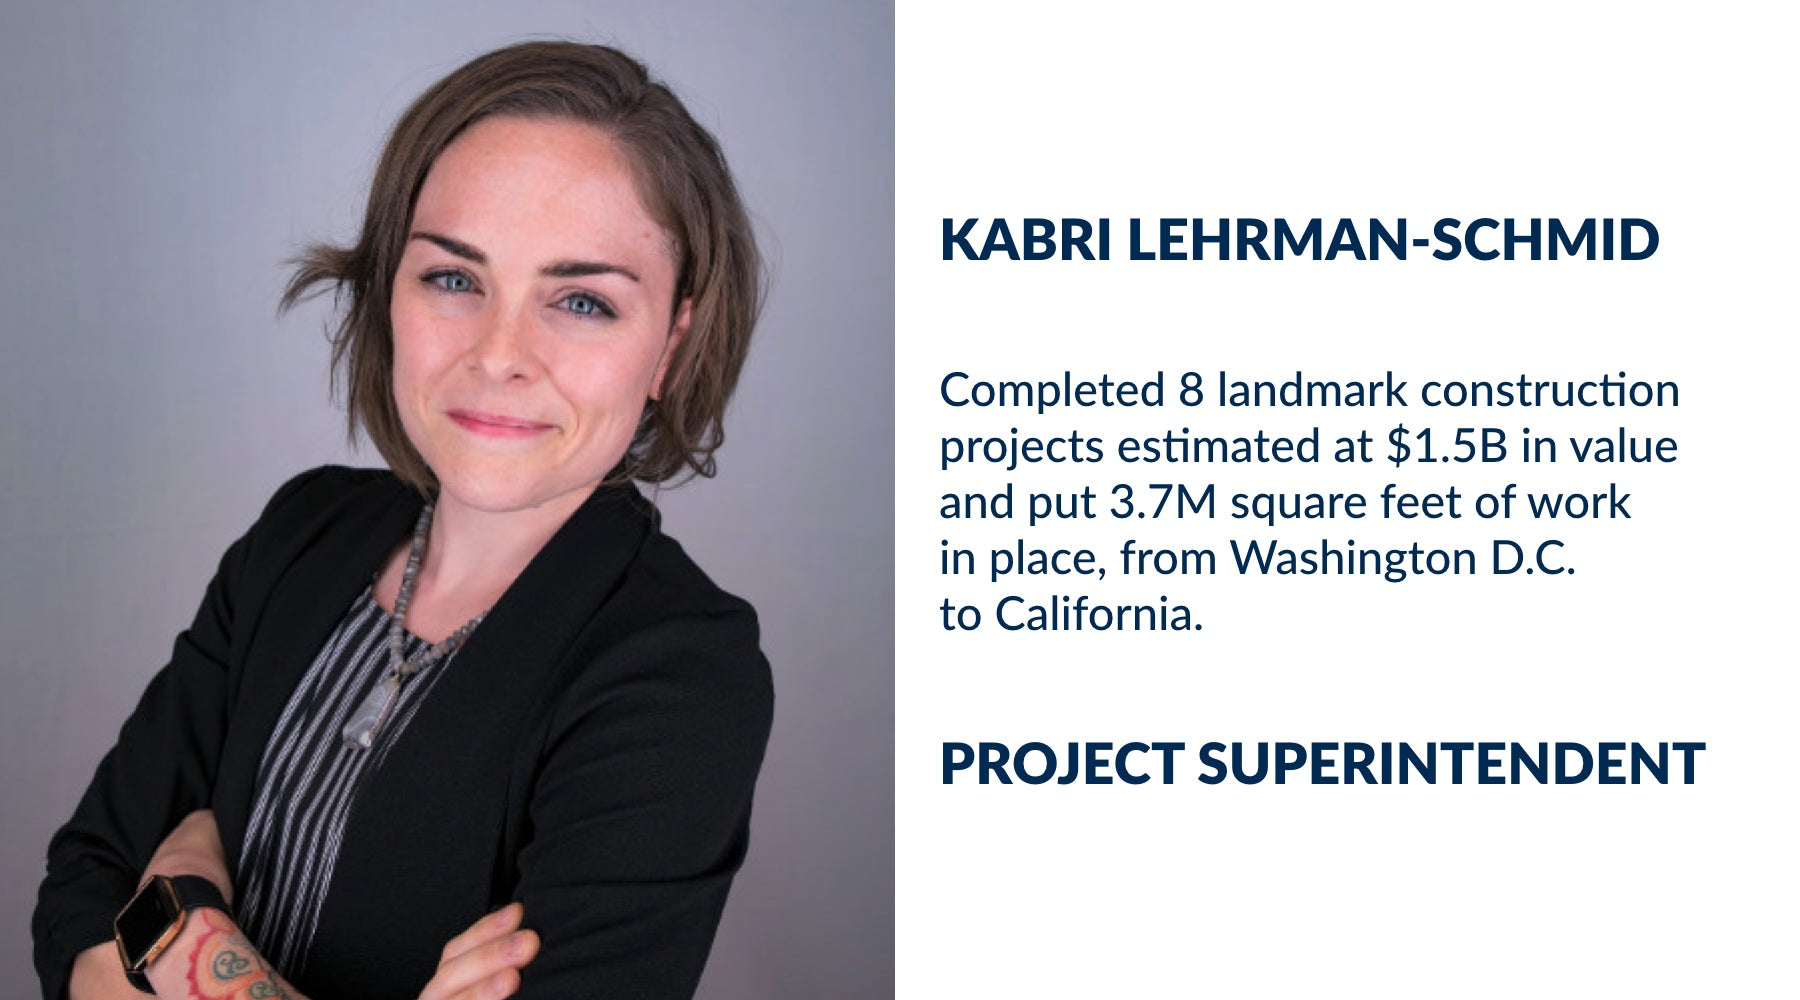 Kabri Leghrman-Schmid Project Superintendent at Hensel Phelps